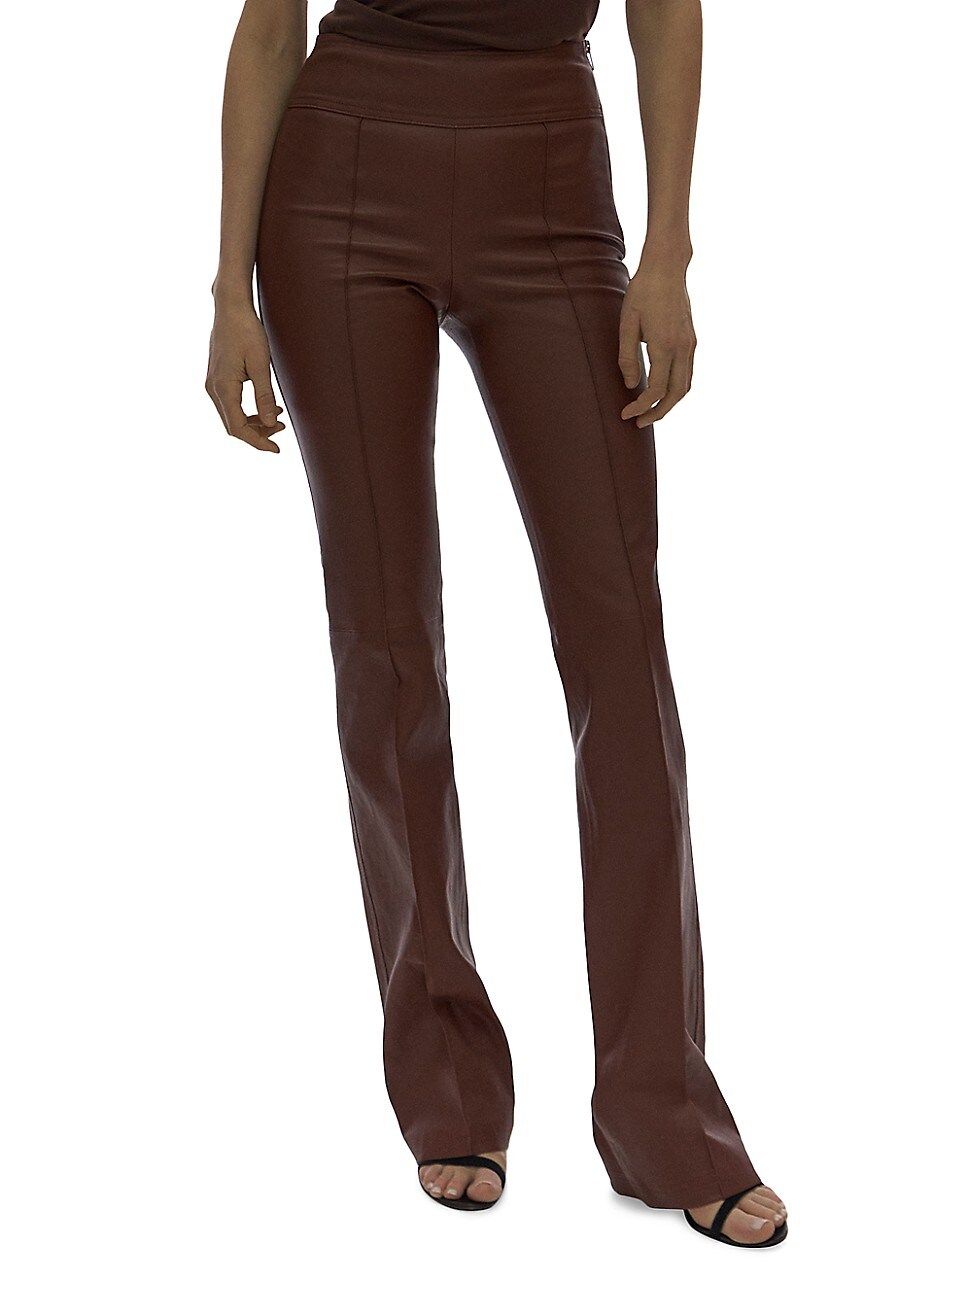 Women's Leather Bootcut Pants - Cinnamon - Size 10 | Saks Fifth Avenue